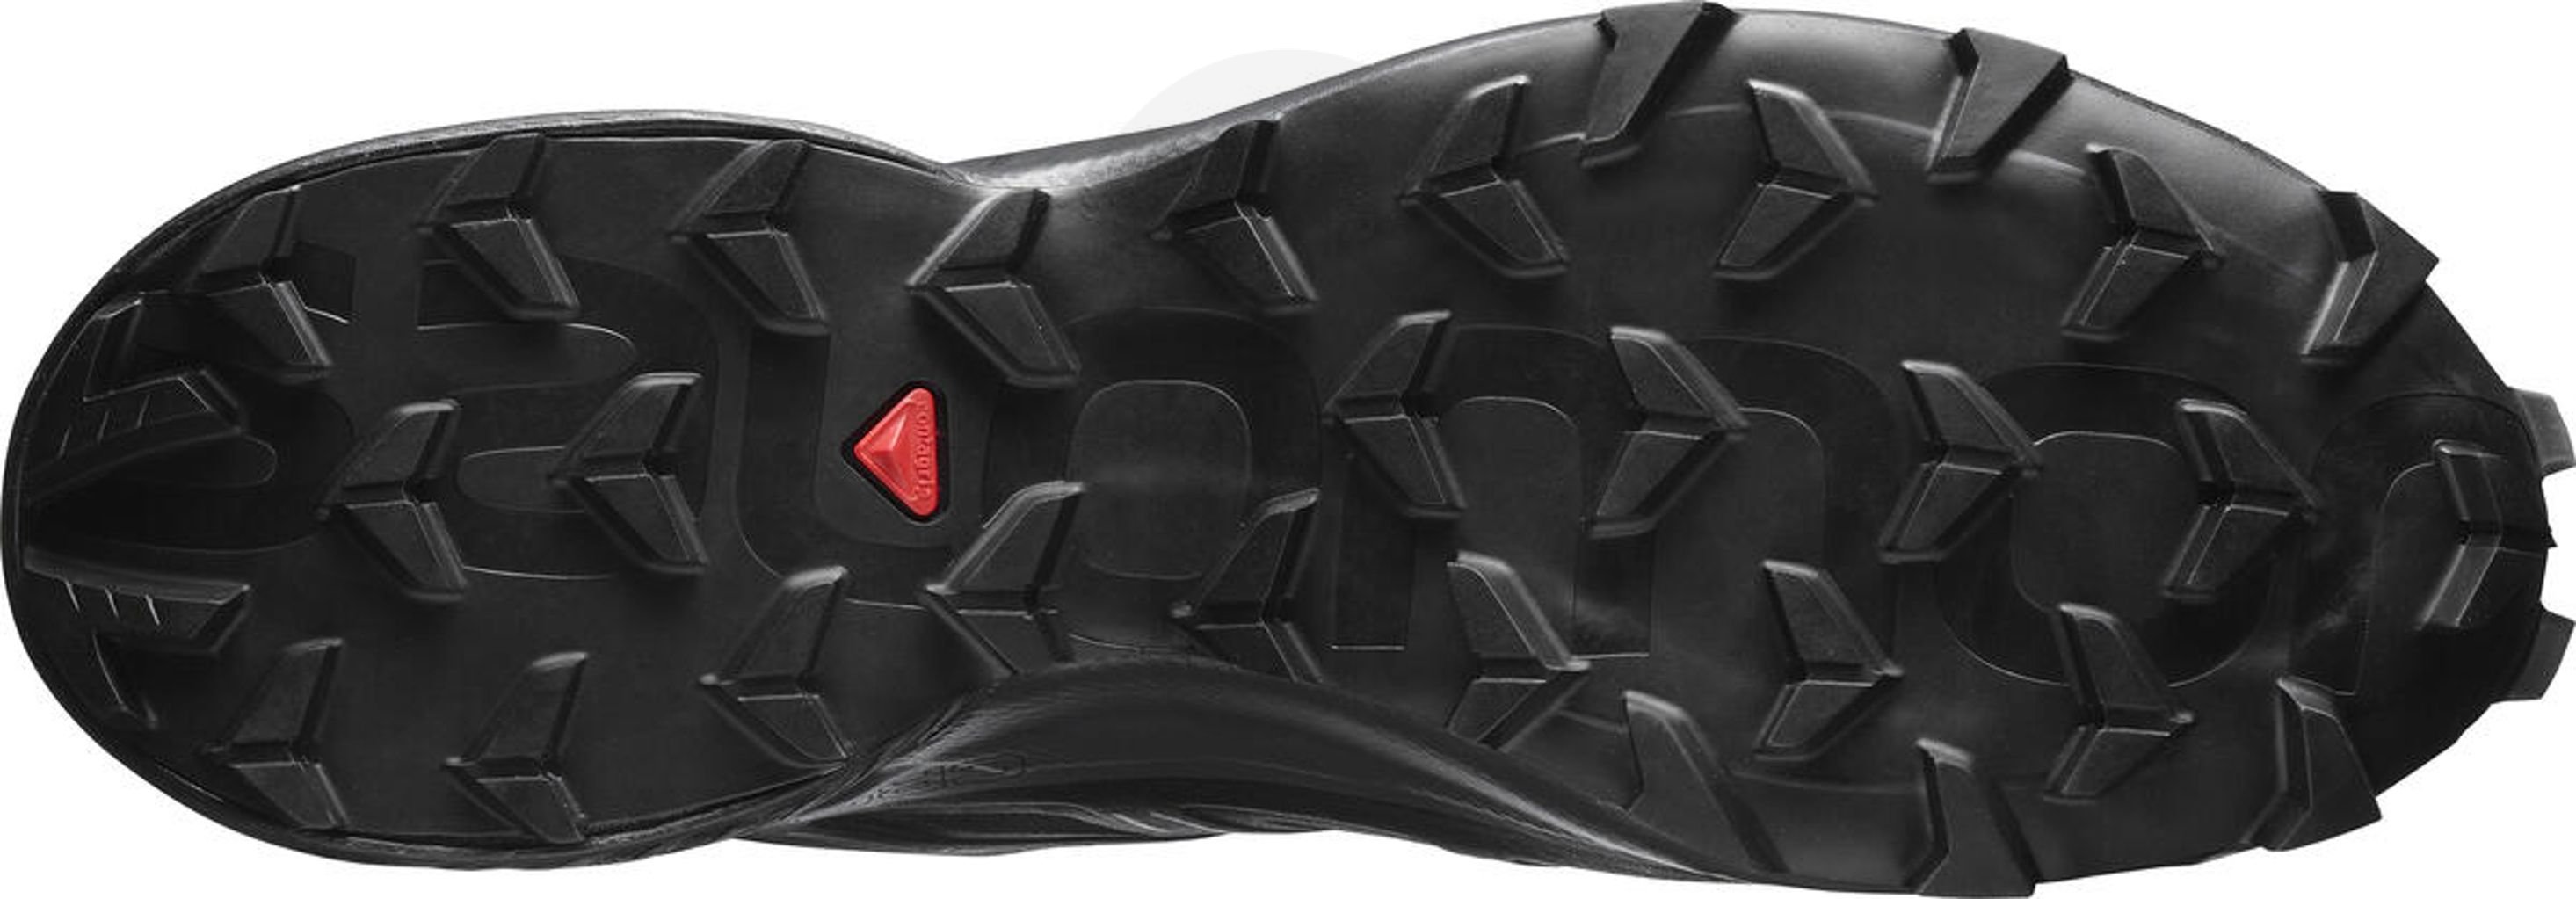 Obuv Salomon Speedcross 5 GTX M - černá